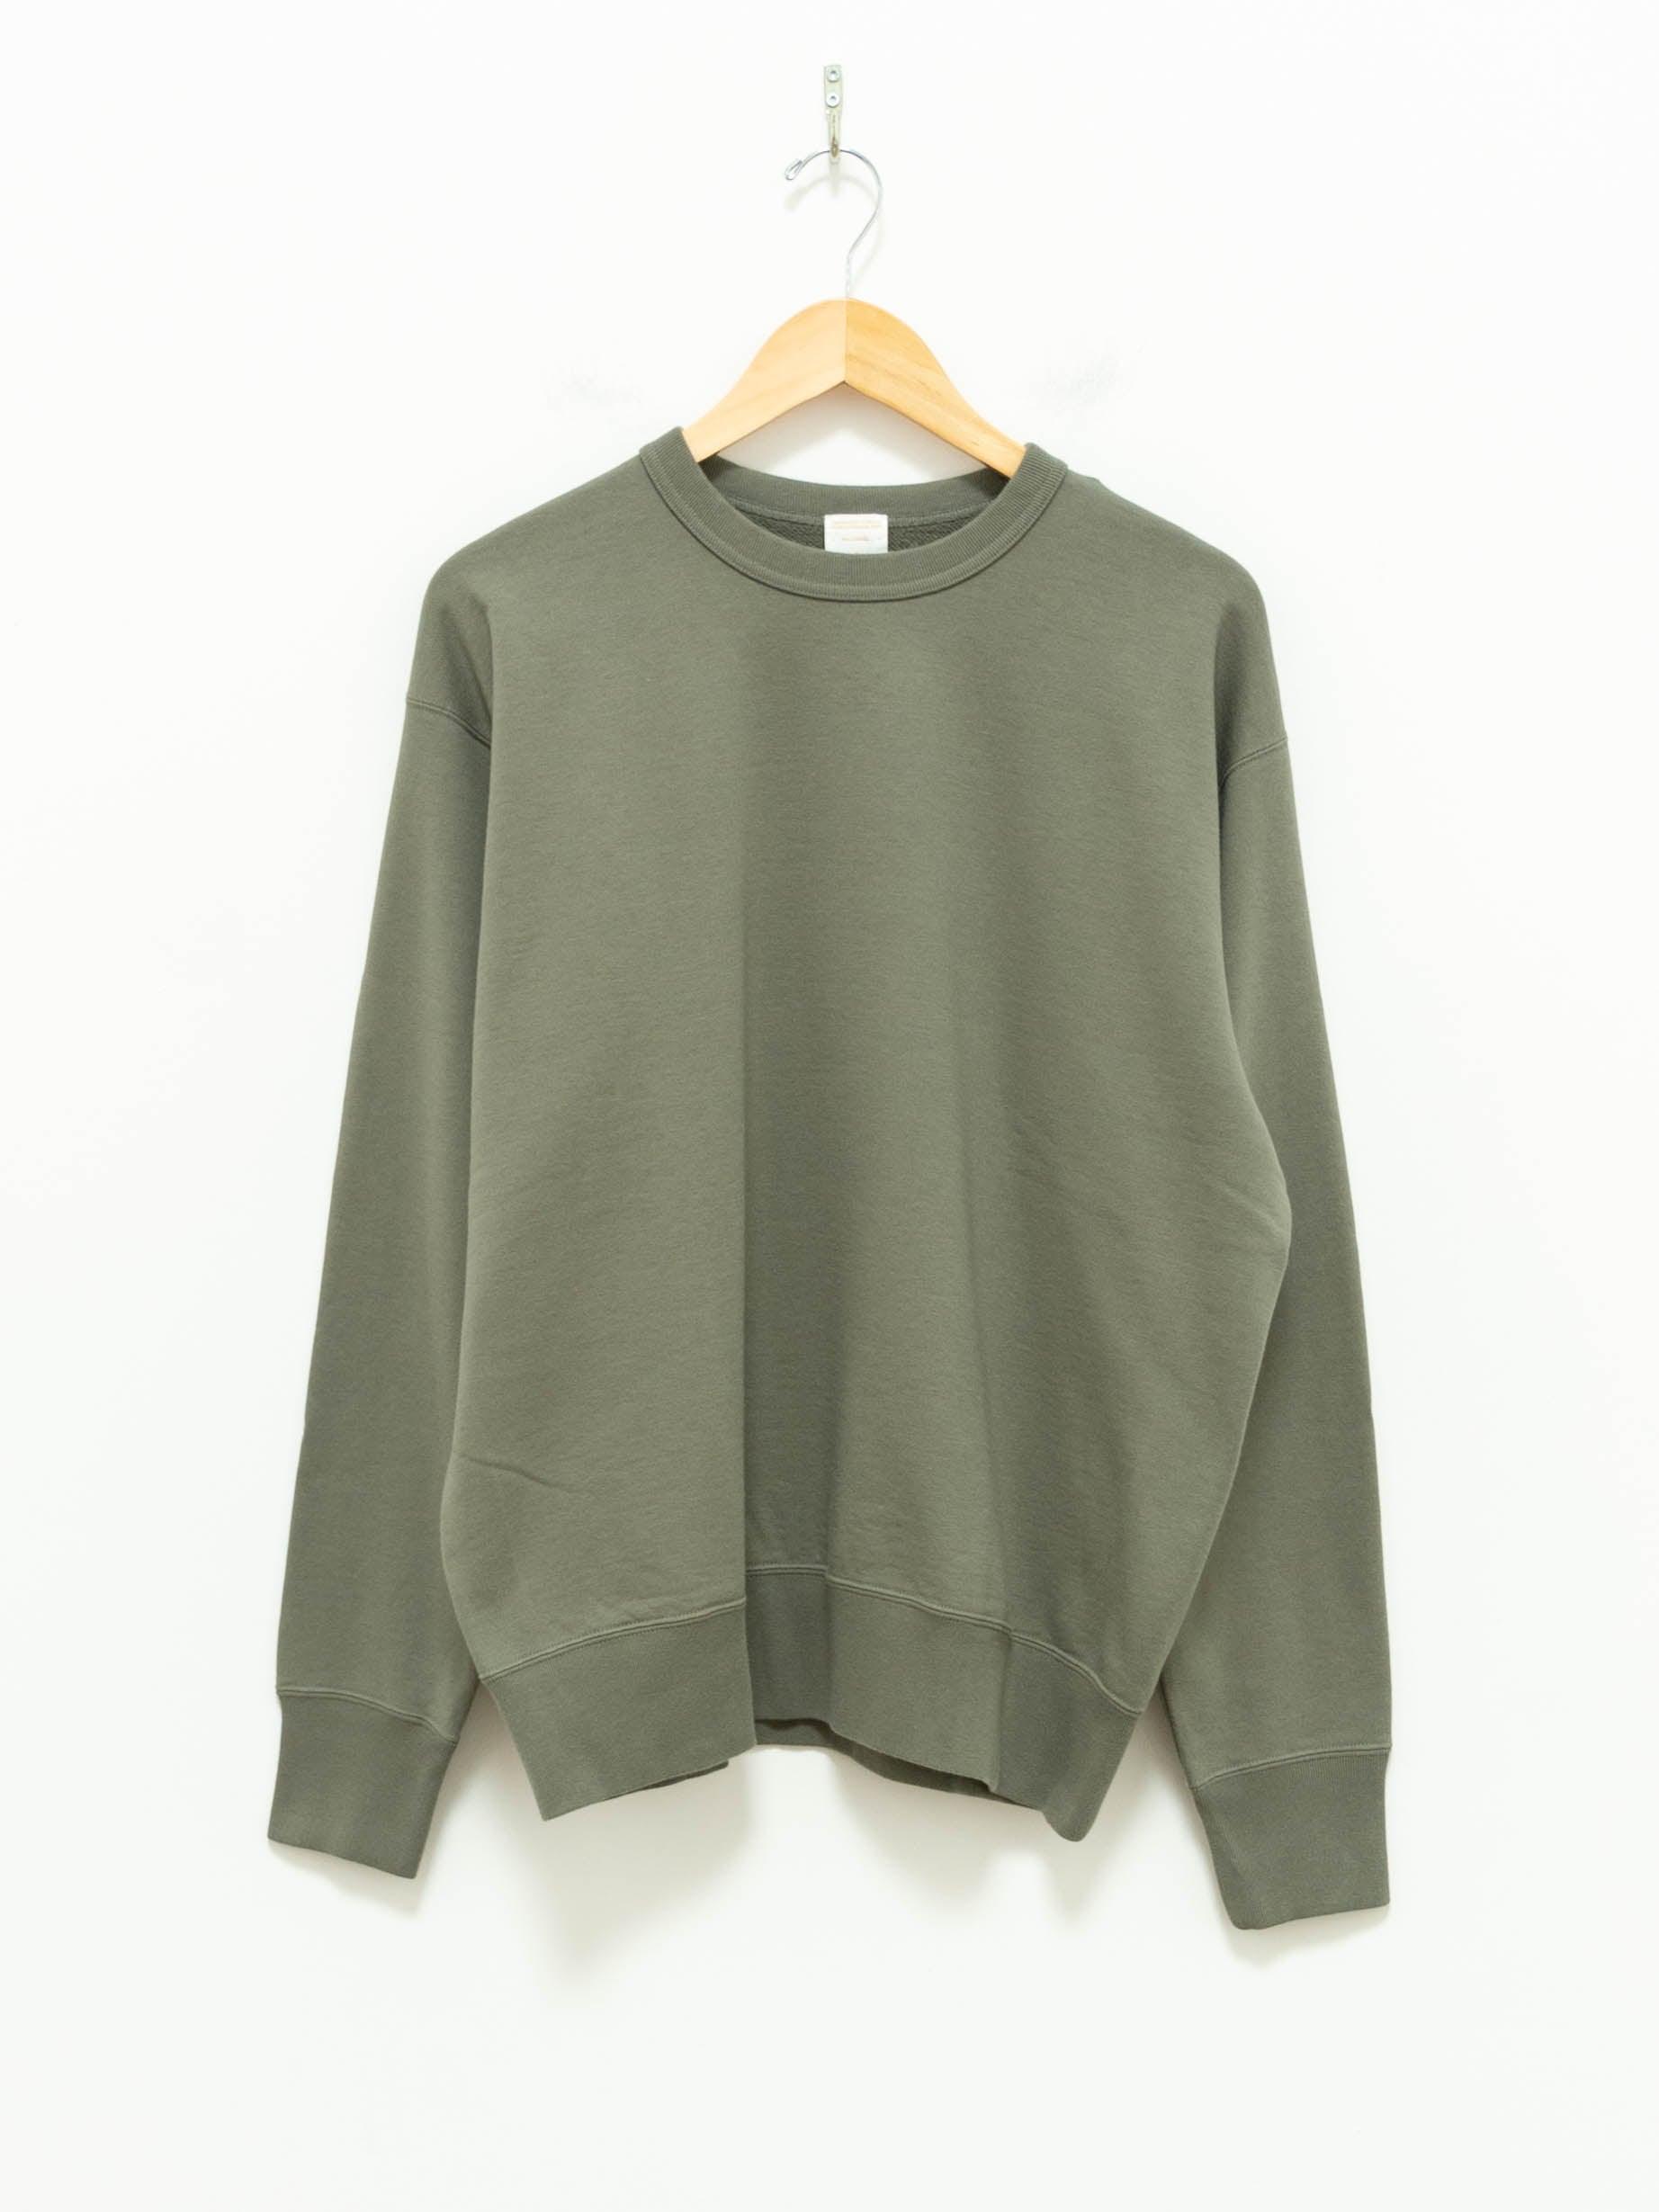 Namu Shop - Phlannel Suvin Cotton Sweatshirt - Khaki Green